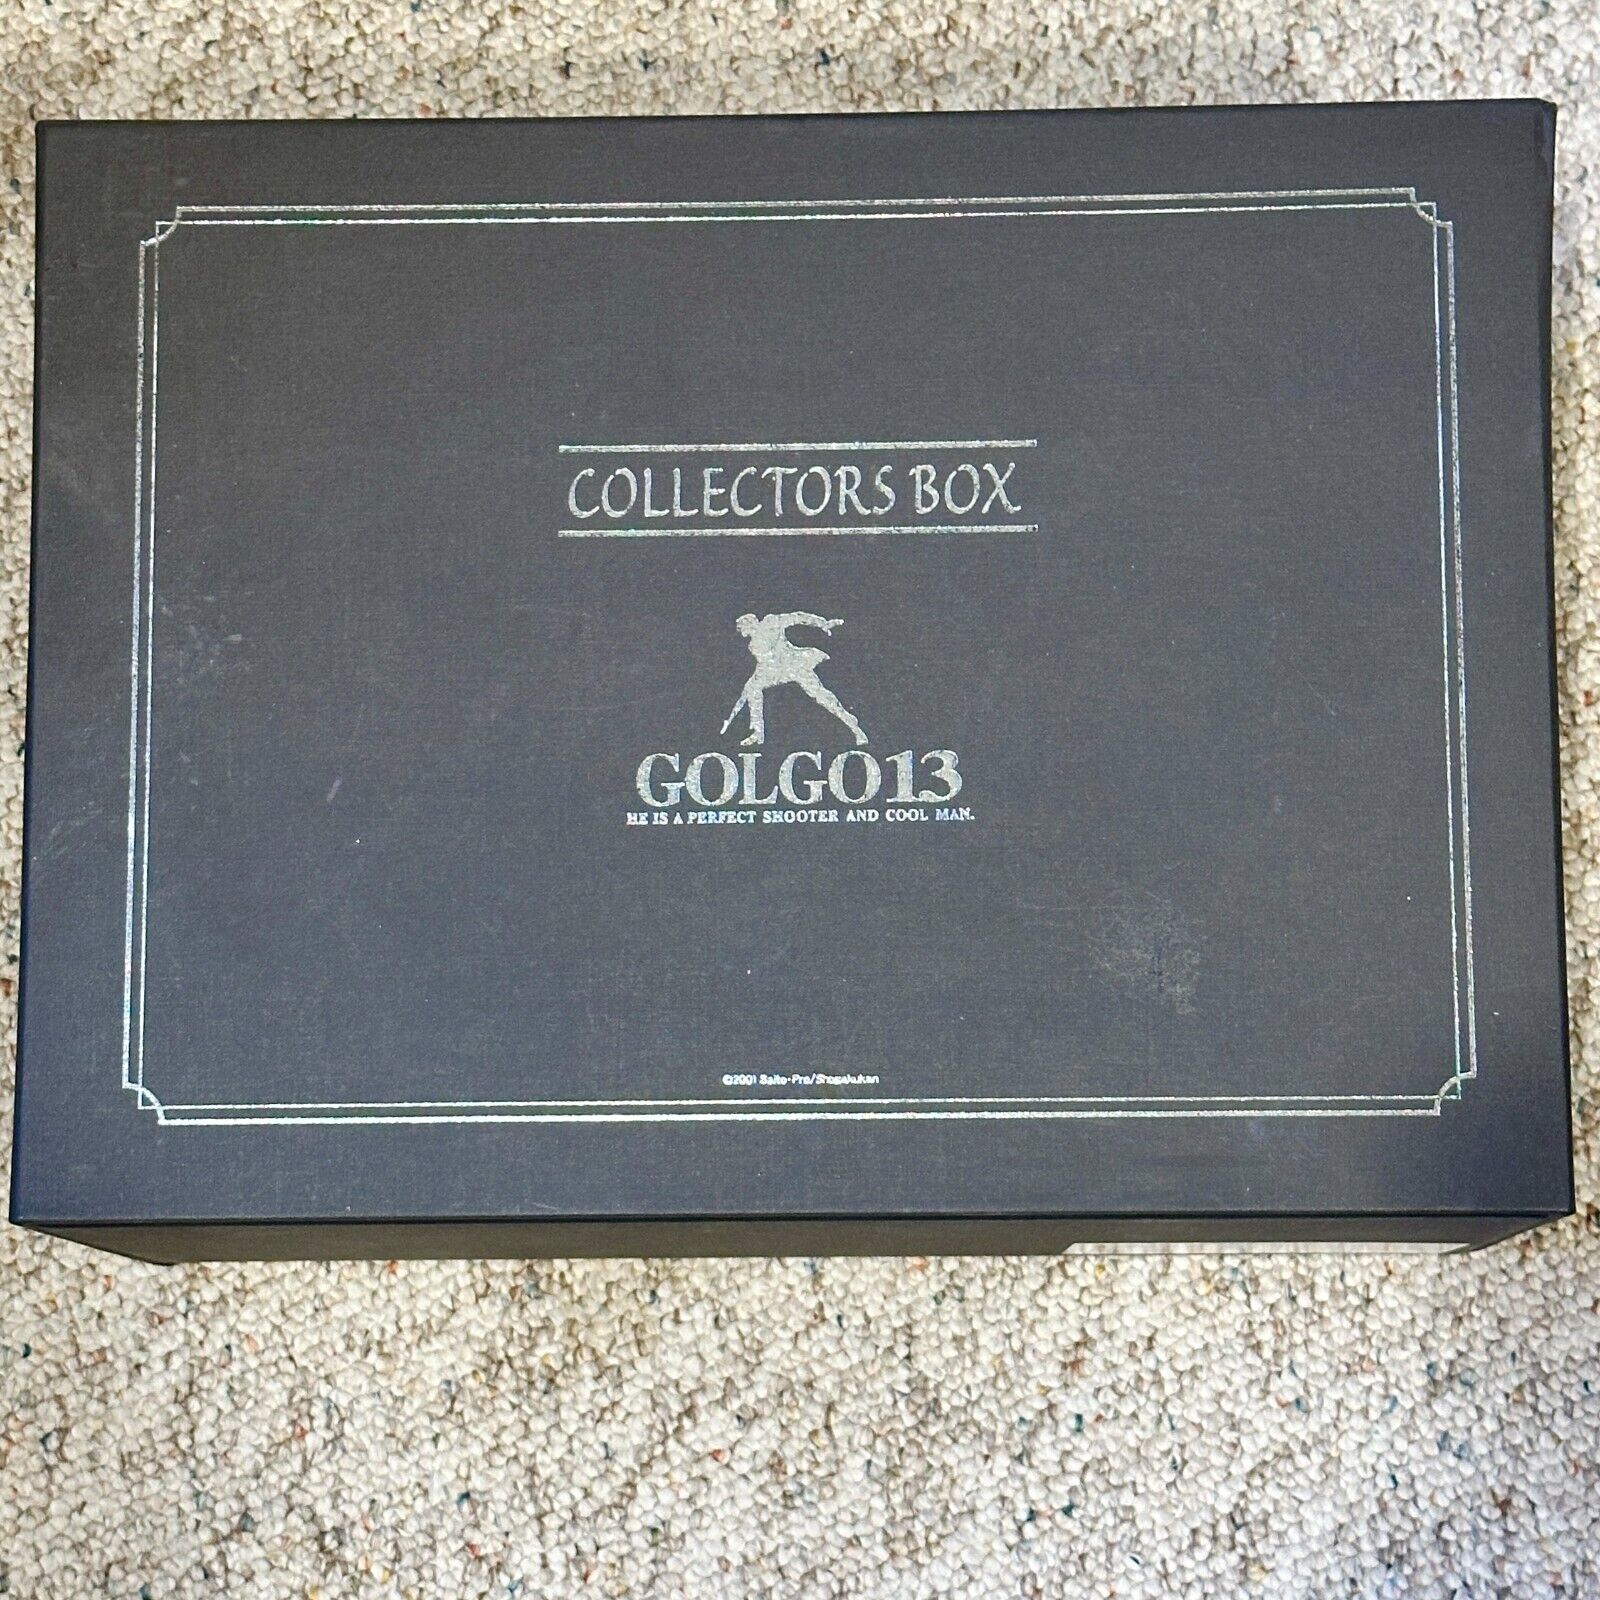 Golgo 13 (ゴルゴ13) - Collector's Box, Manga/Action Figure/Comics/etc., US SELLER